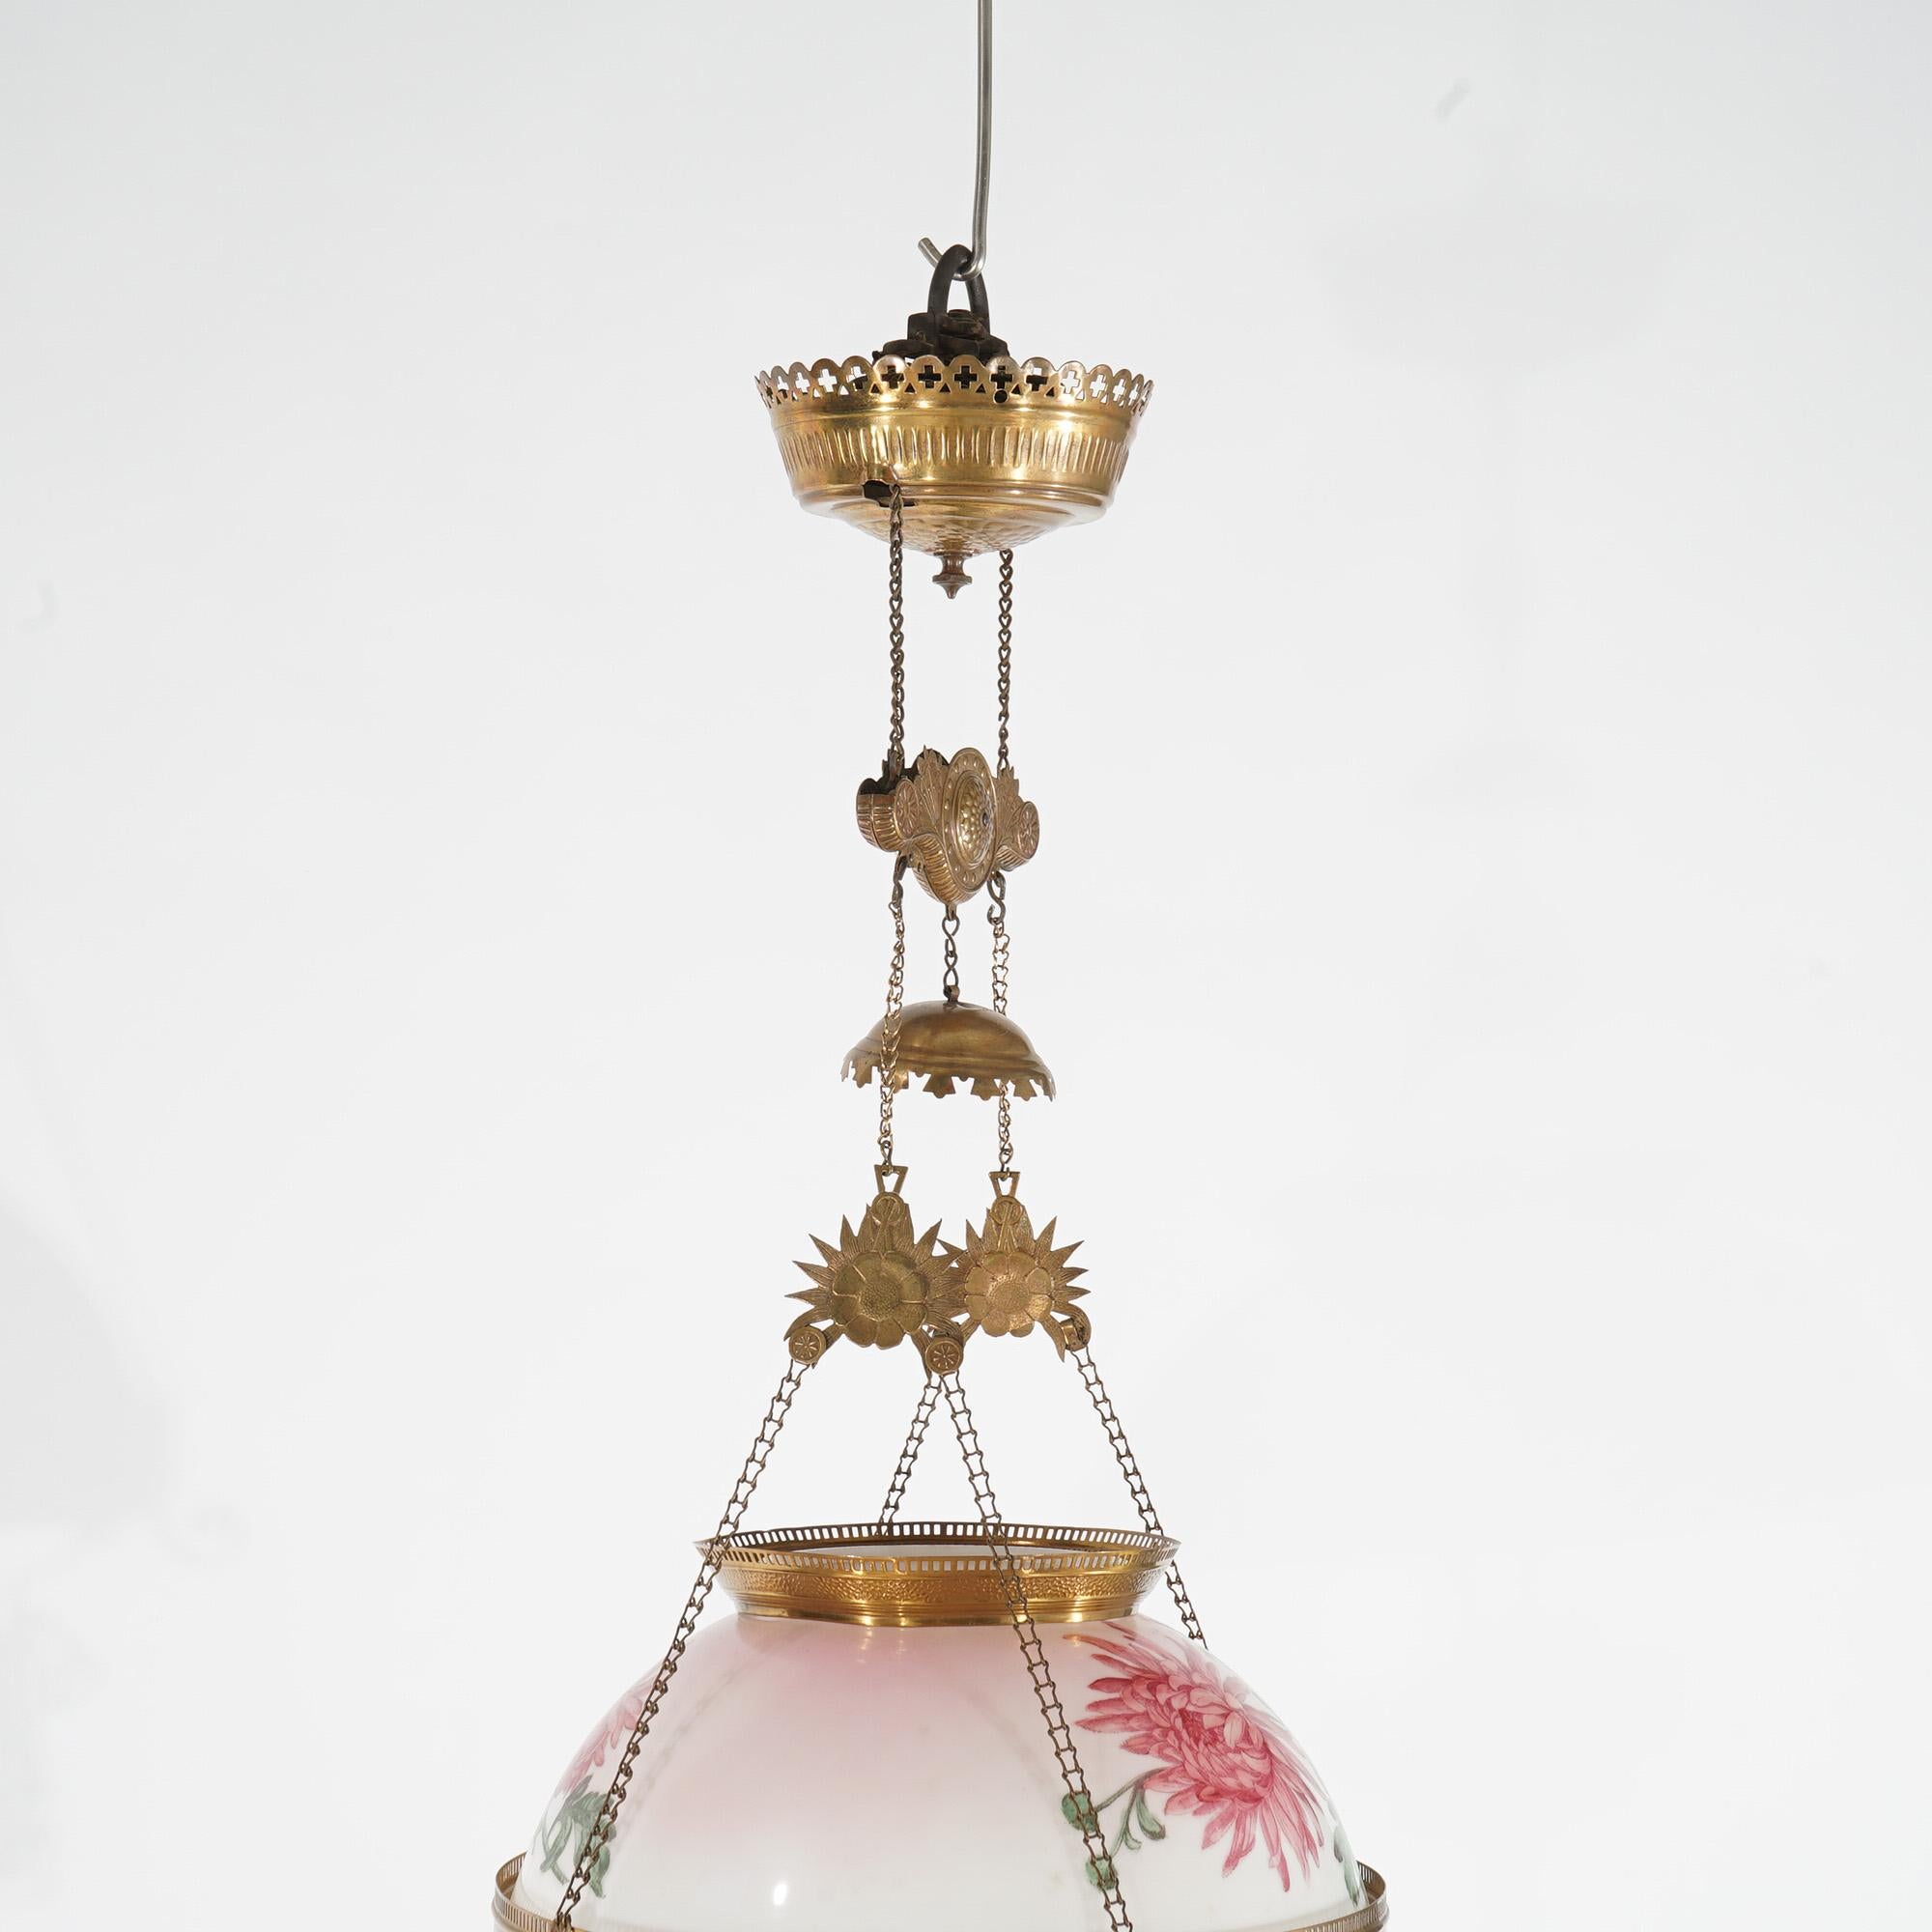 Antique Aesthetic Movement Hand Painted Hanging Kerosene Lamp C1890 For Sale 1